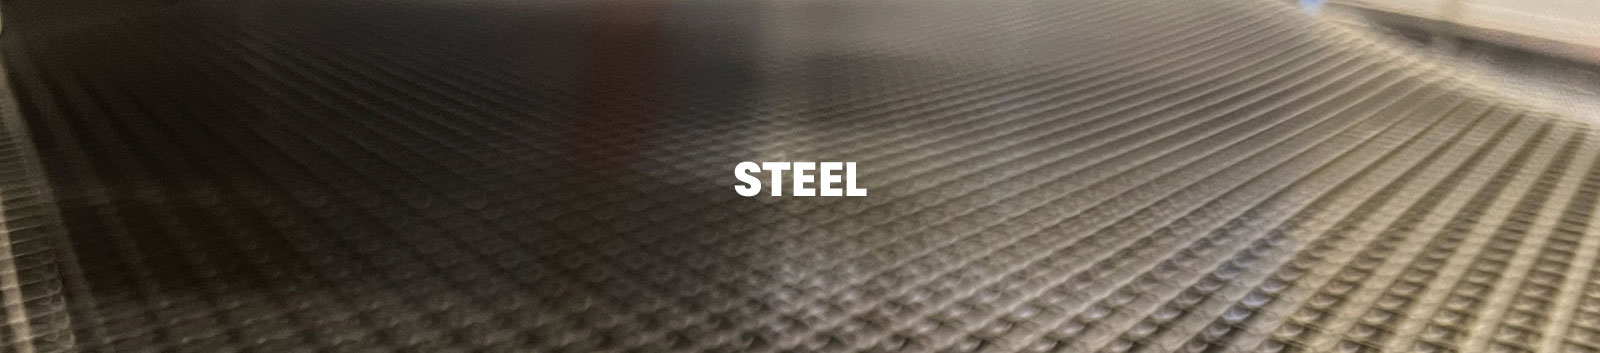 Steel Supply Company in Albuquerque